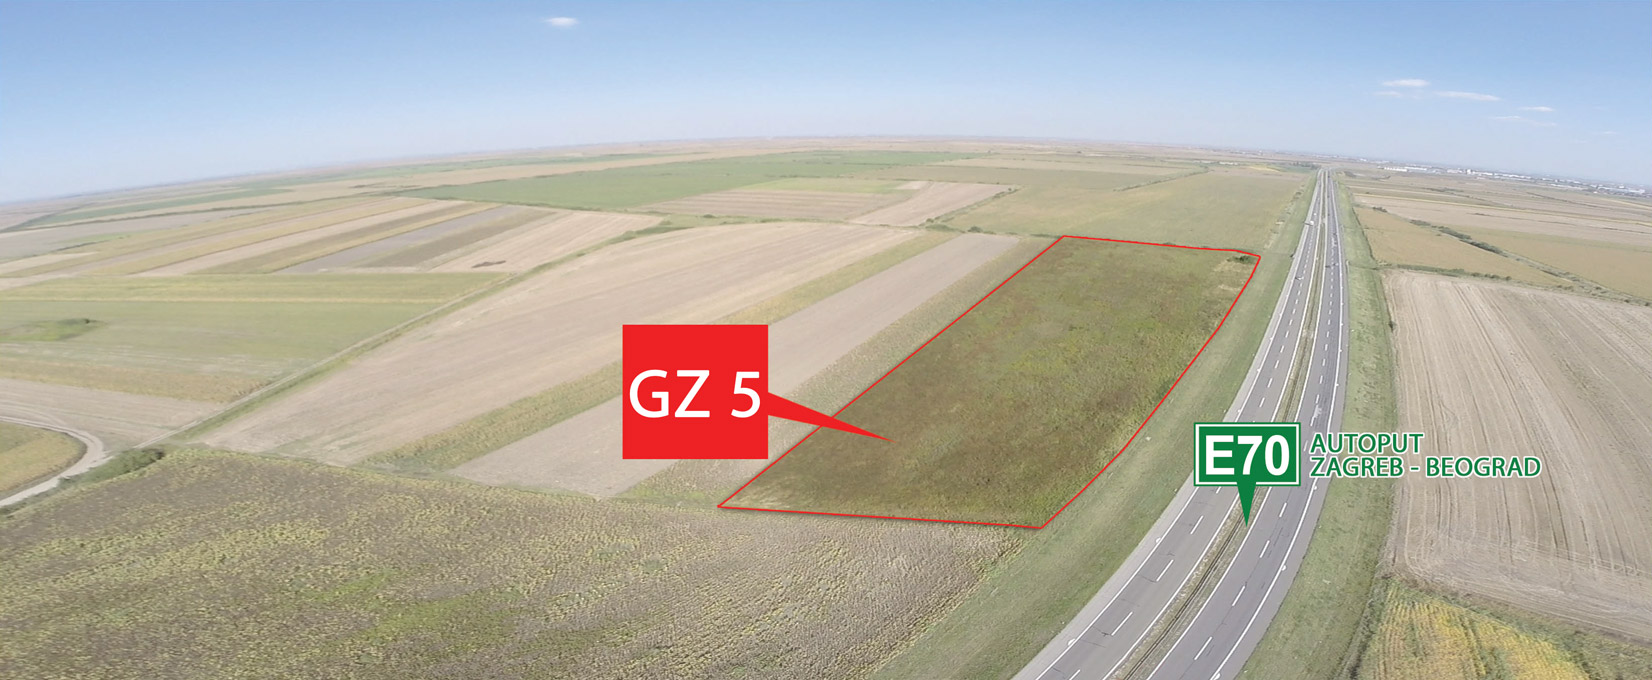 Građevinsko zemljište GZ5, prodaja zemljišta